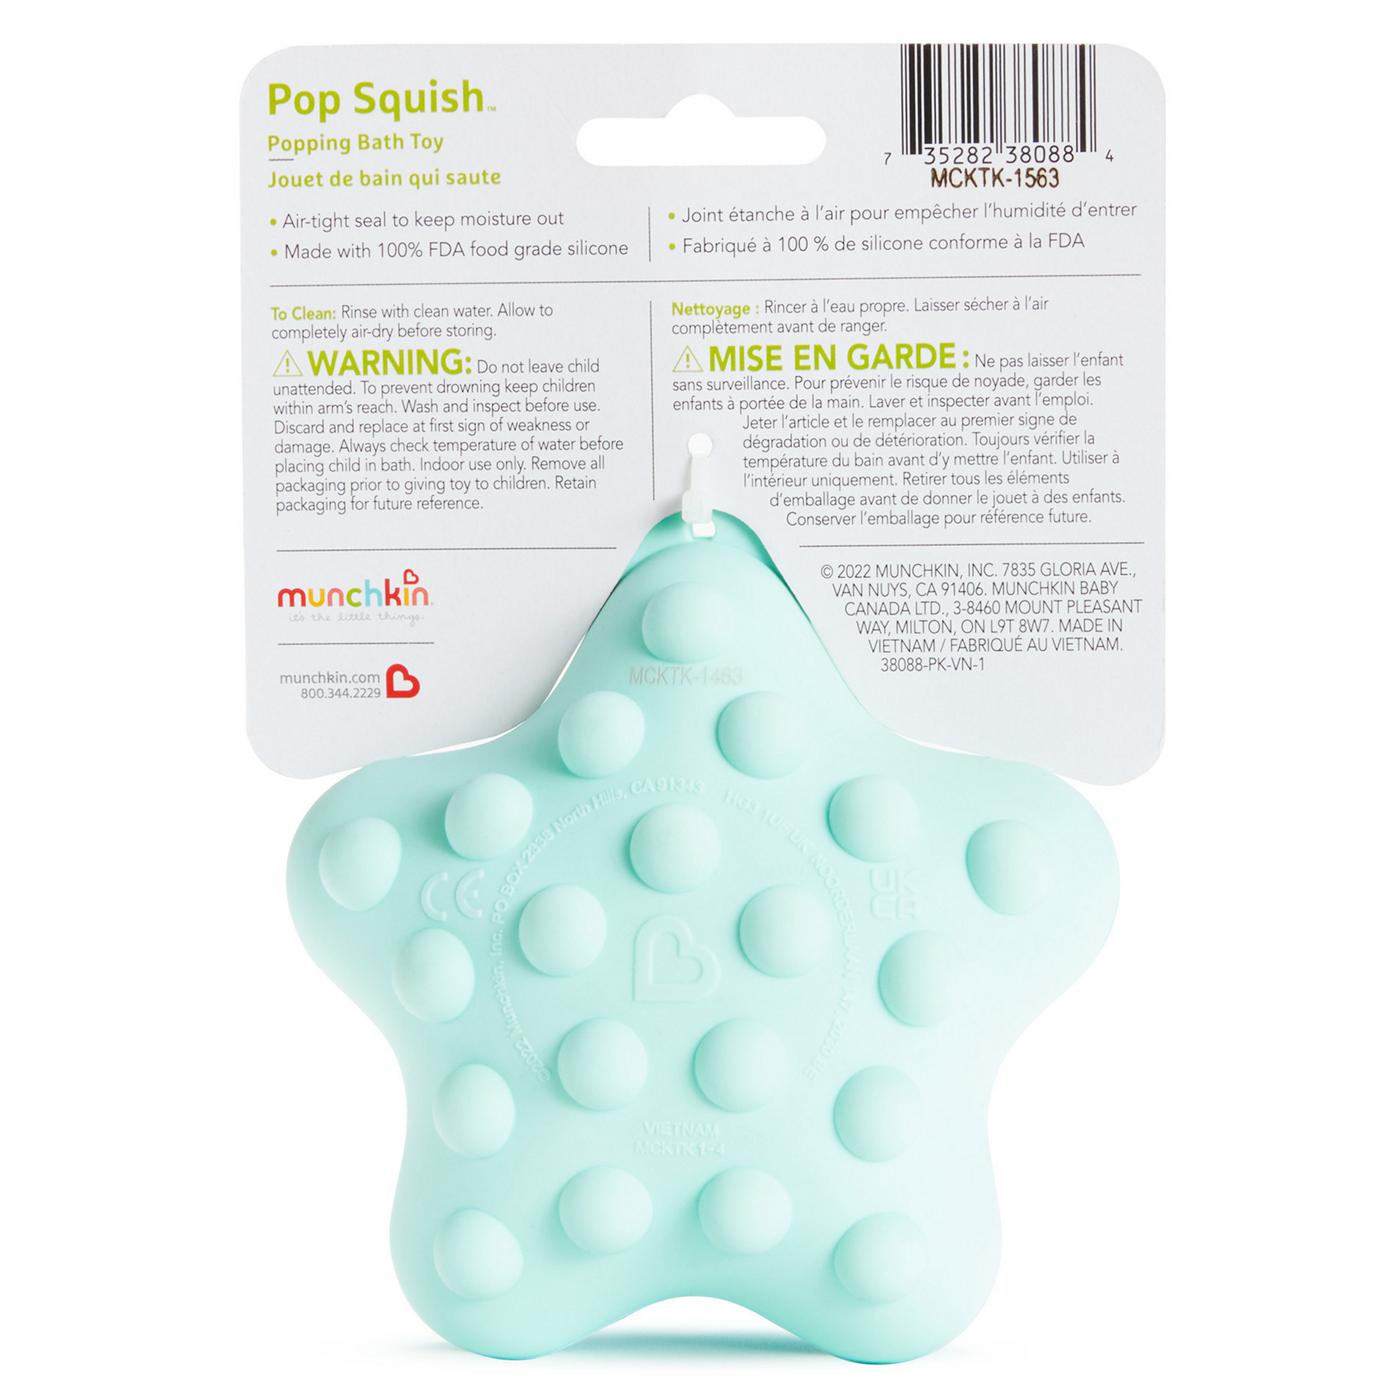 Munchkin Pop Squish Popping Bath Toy; image 2 of 3